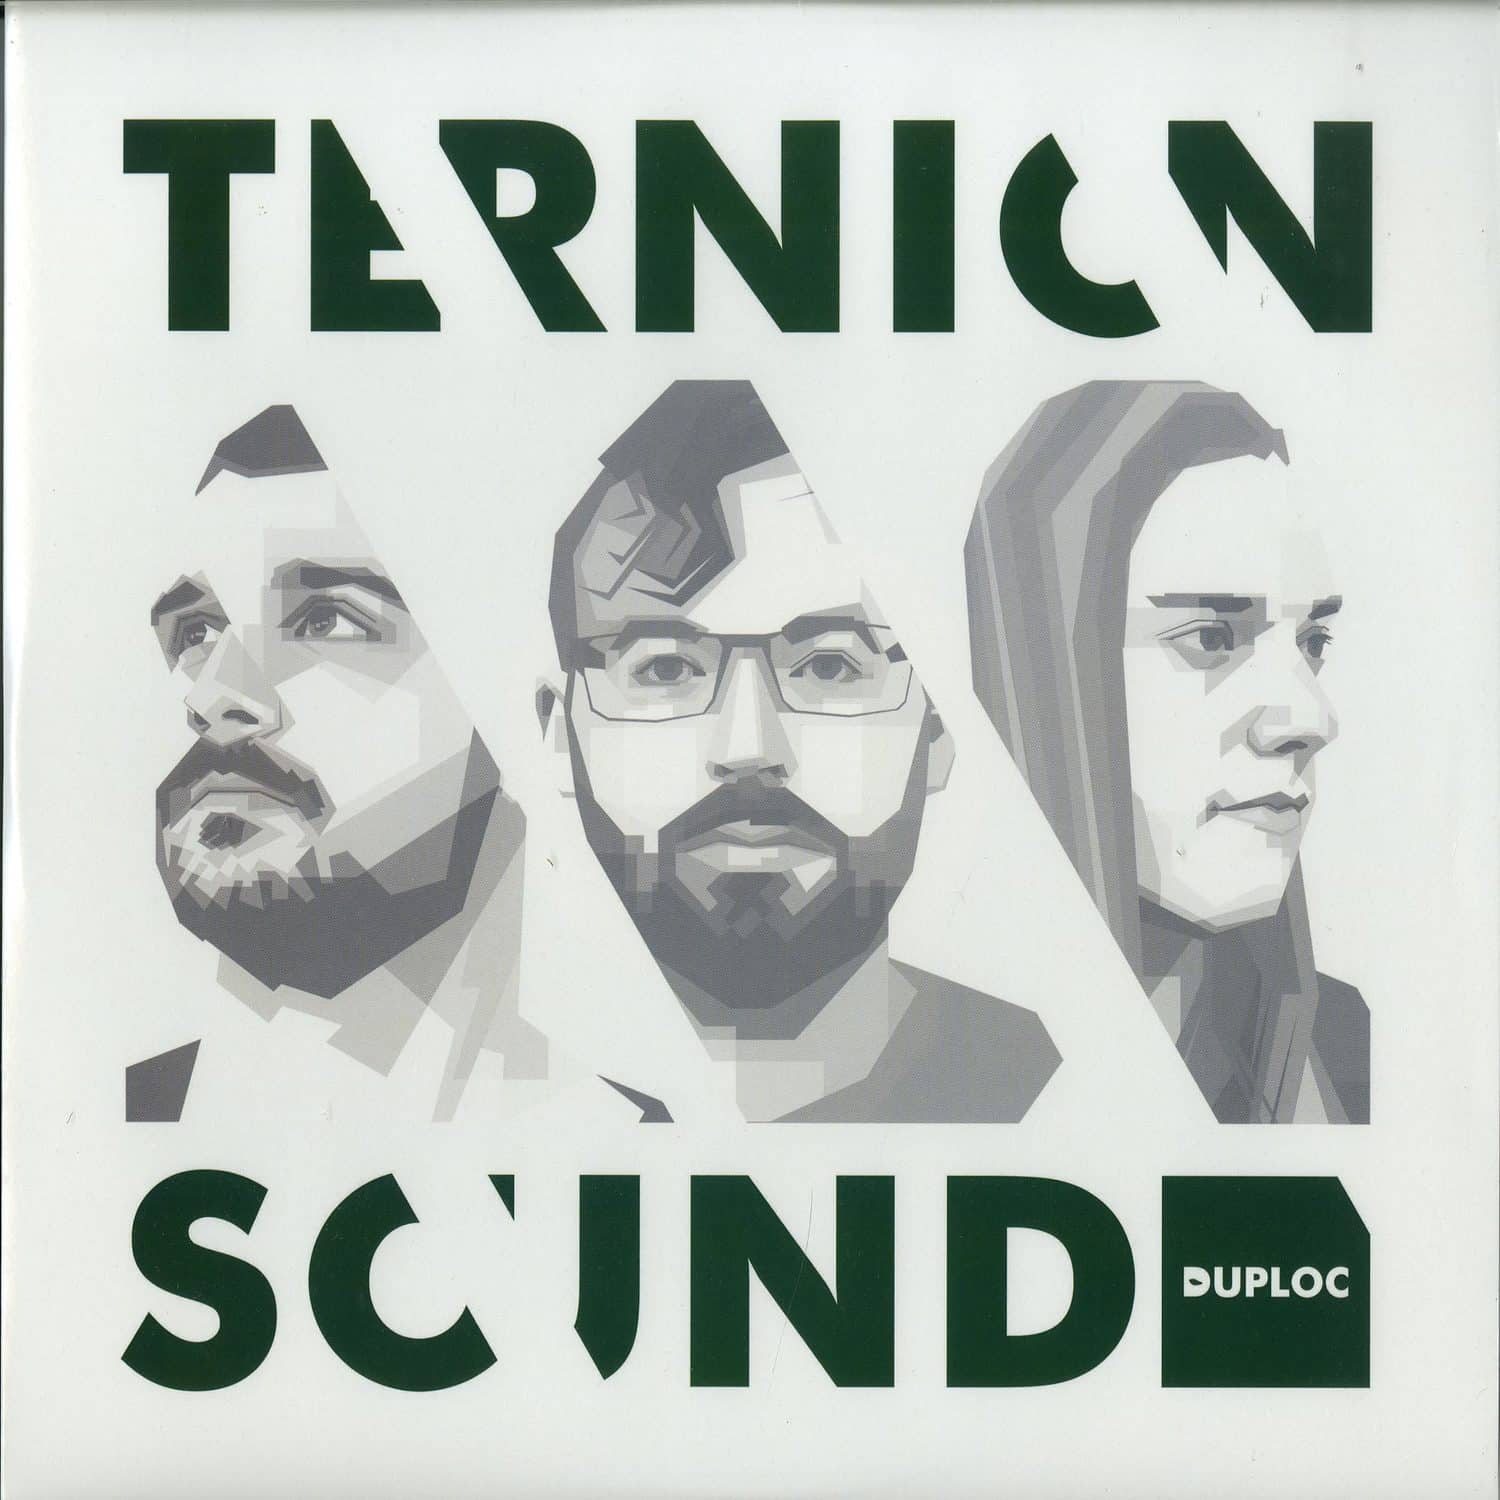 Ternion Sound - DUPLOCV002